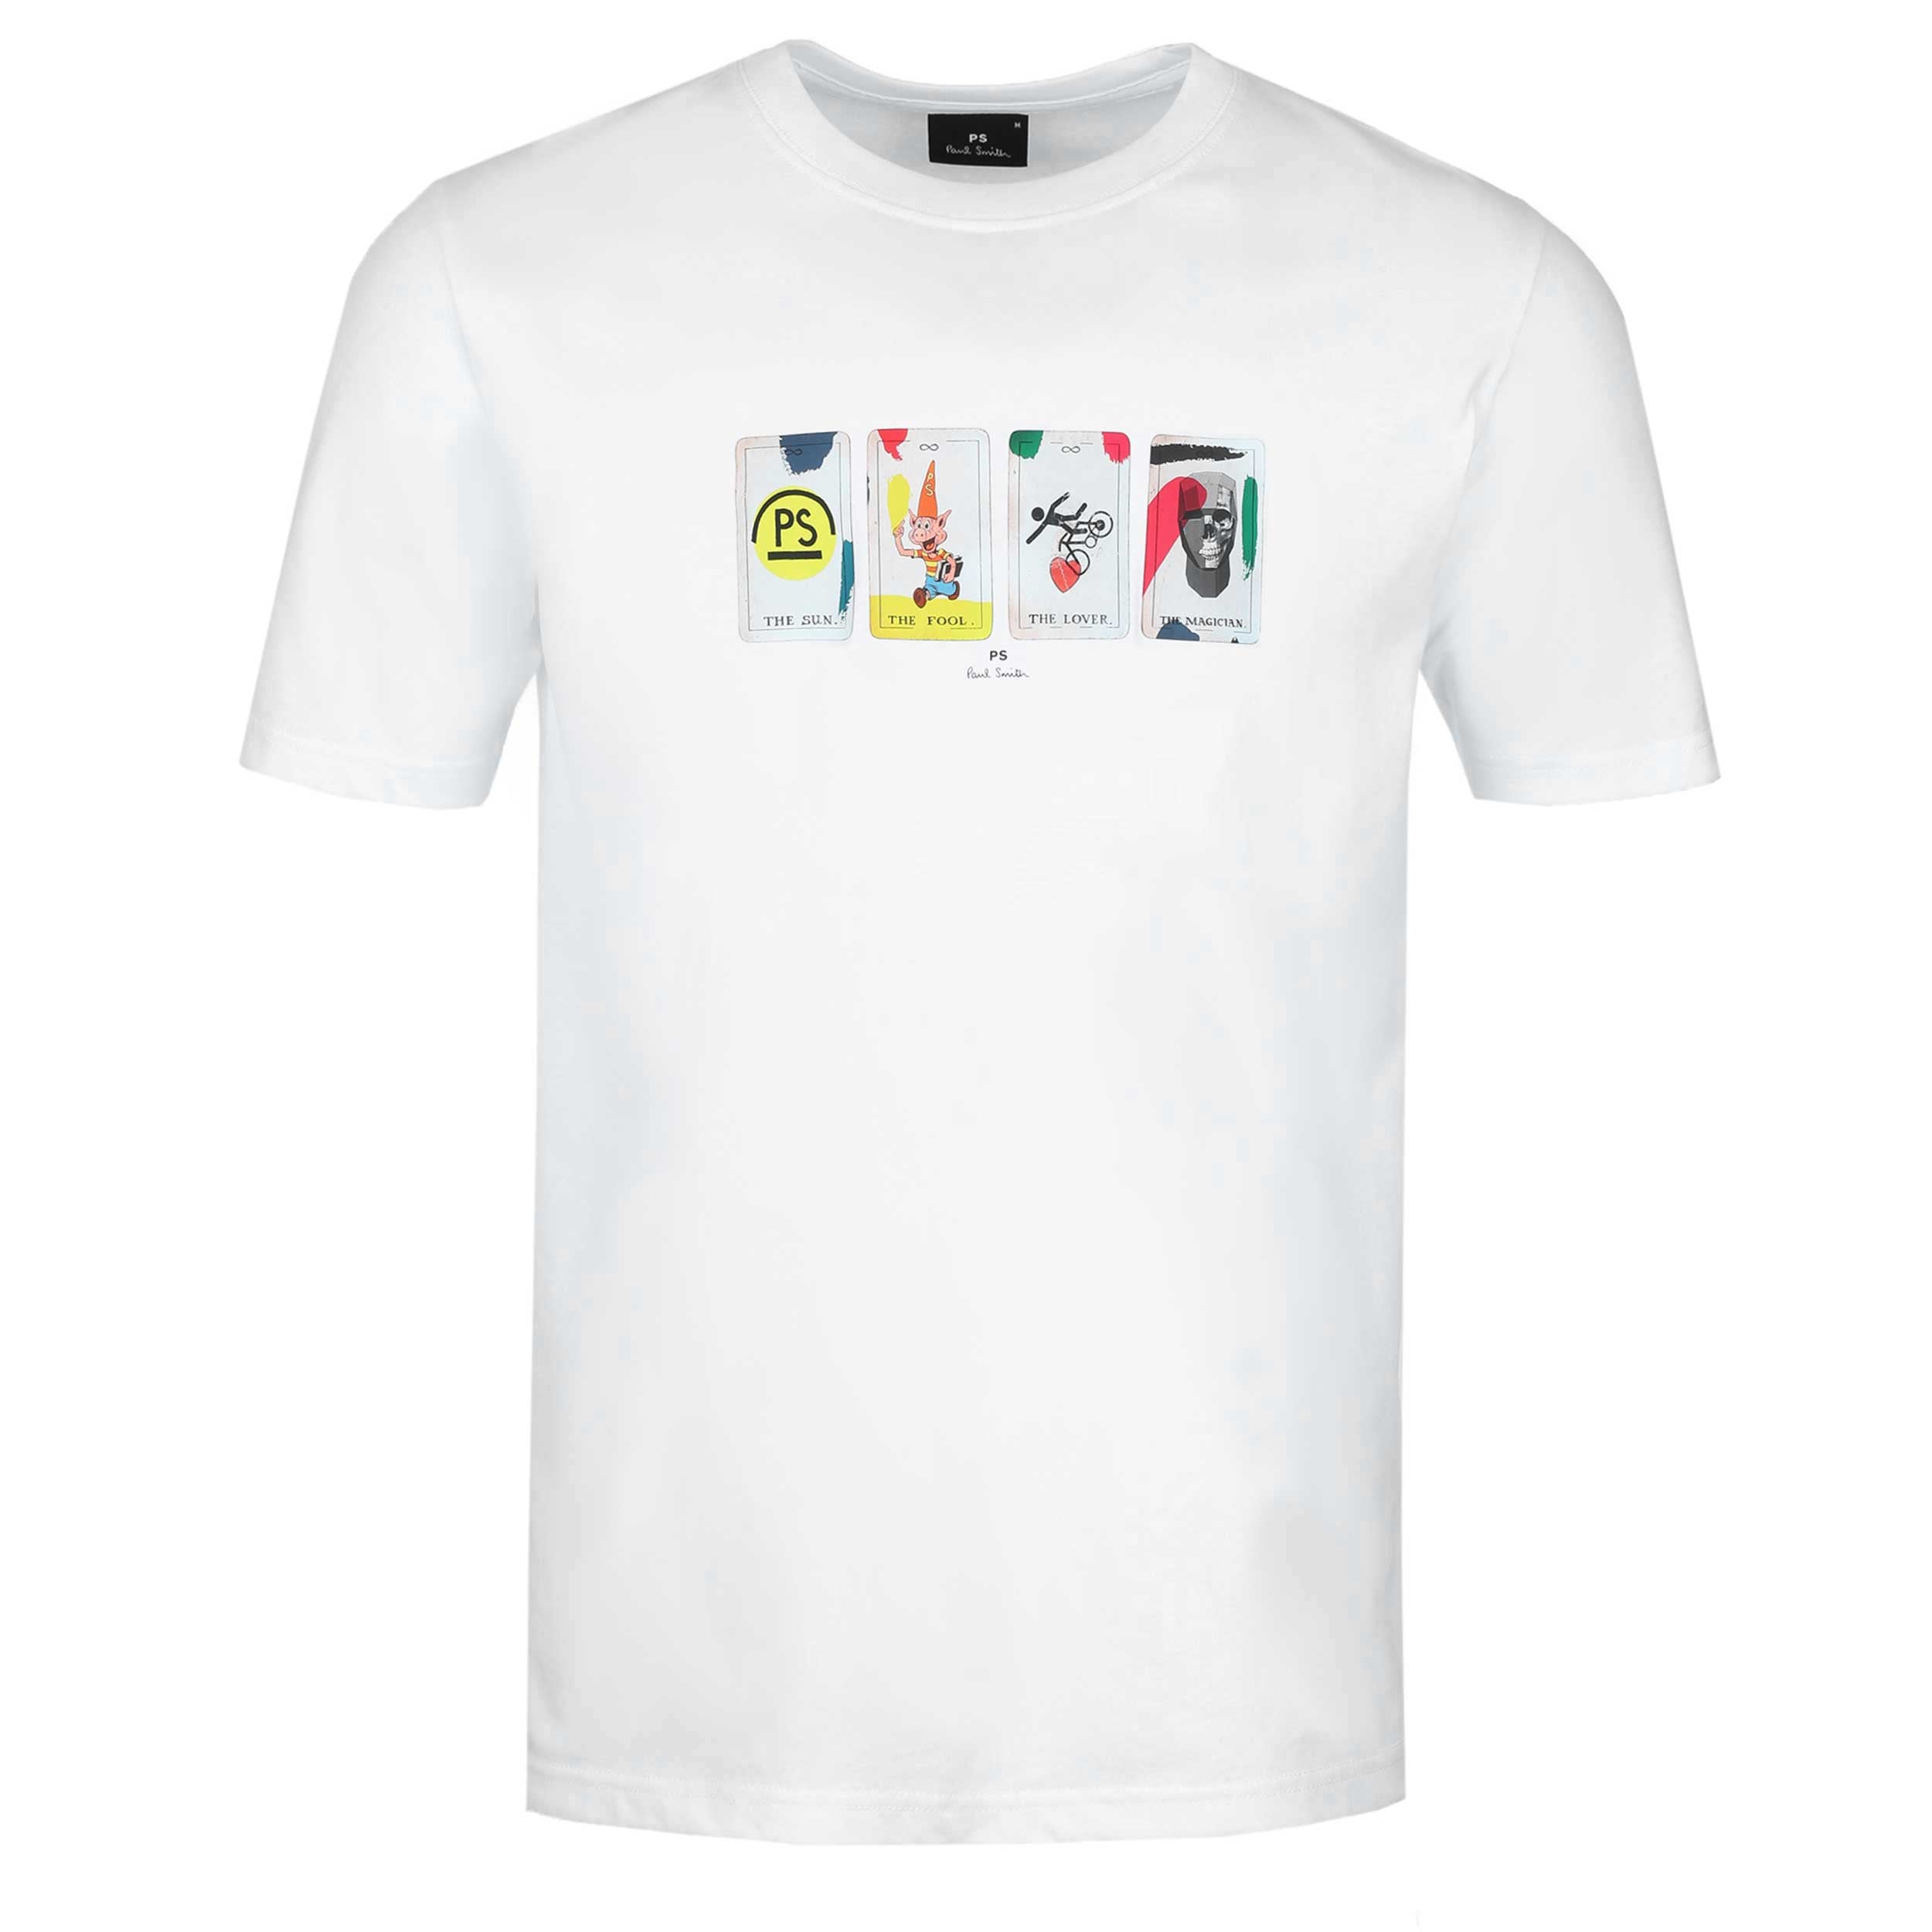 Paul Smith Tarot T Shirt in White